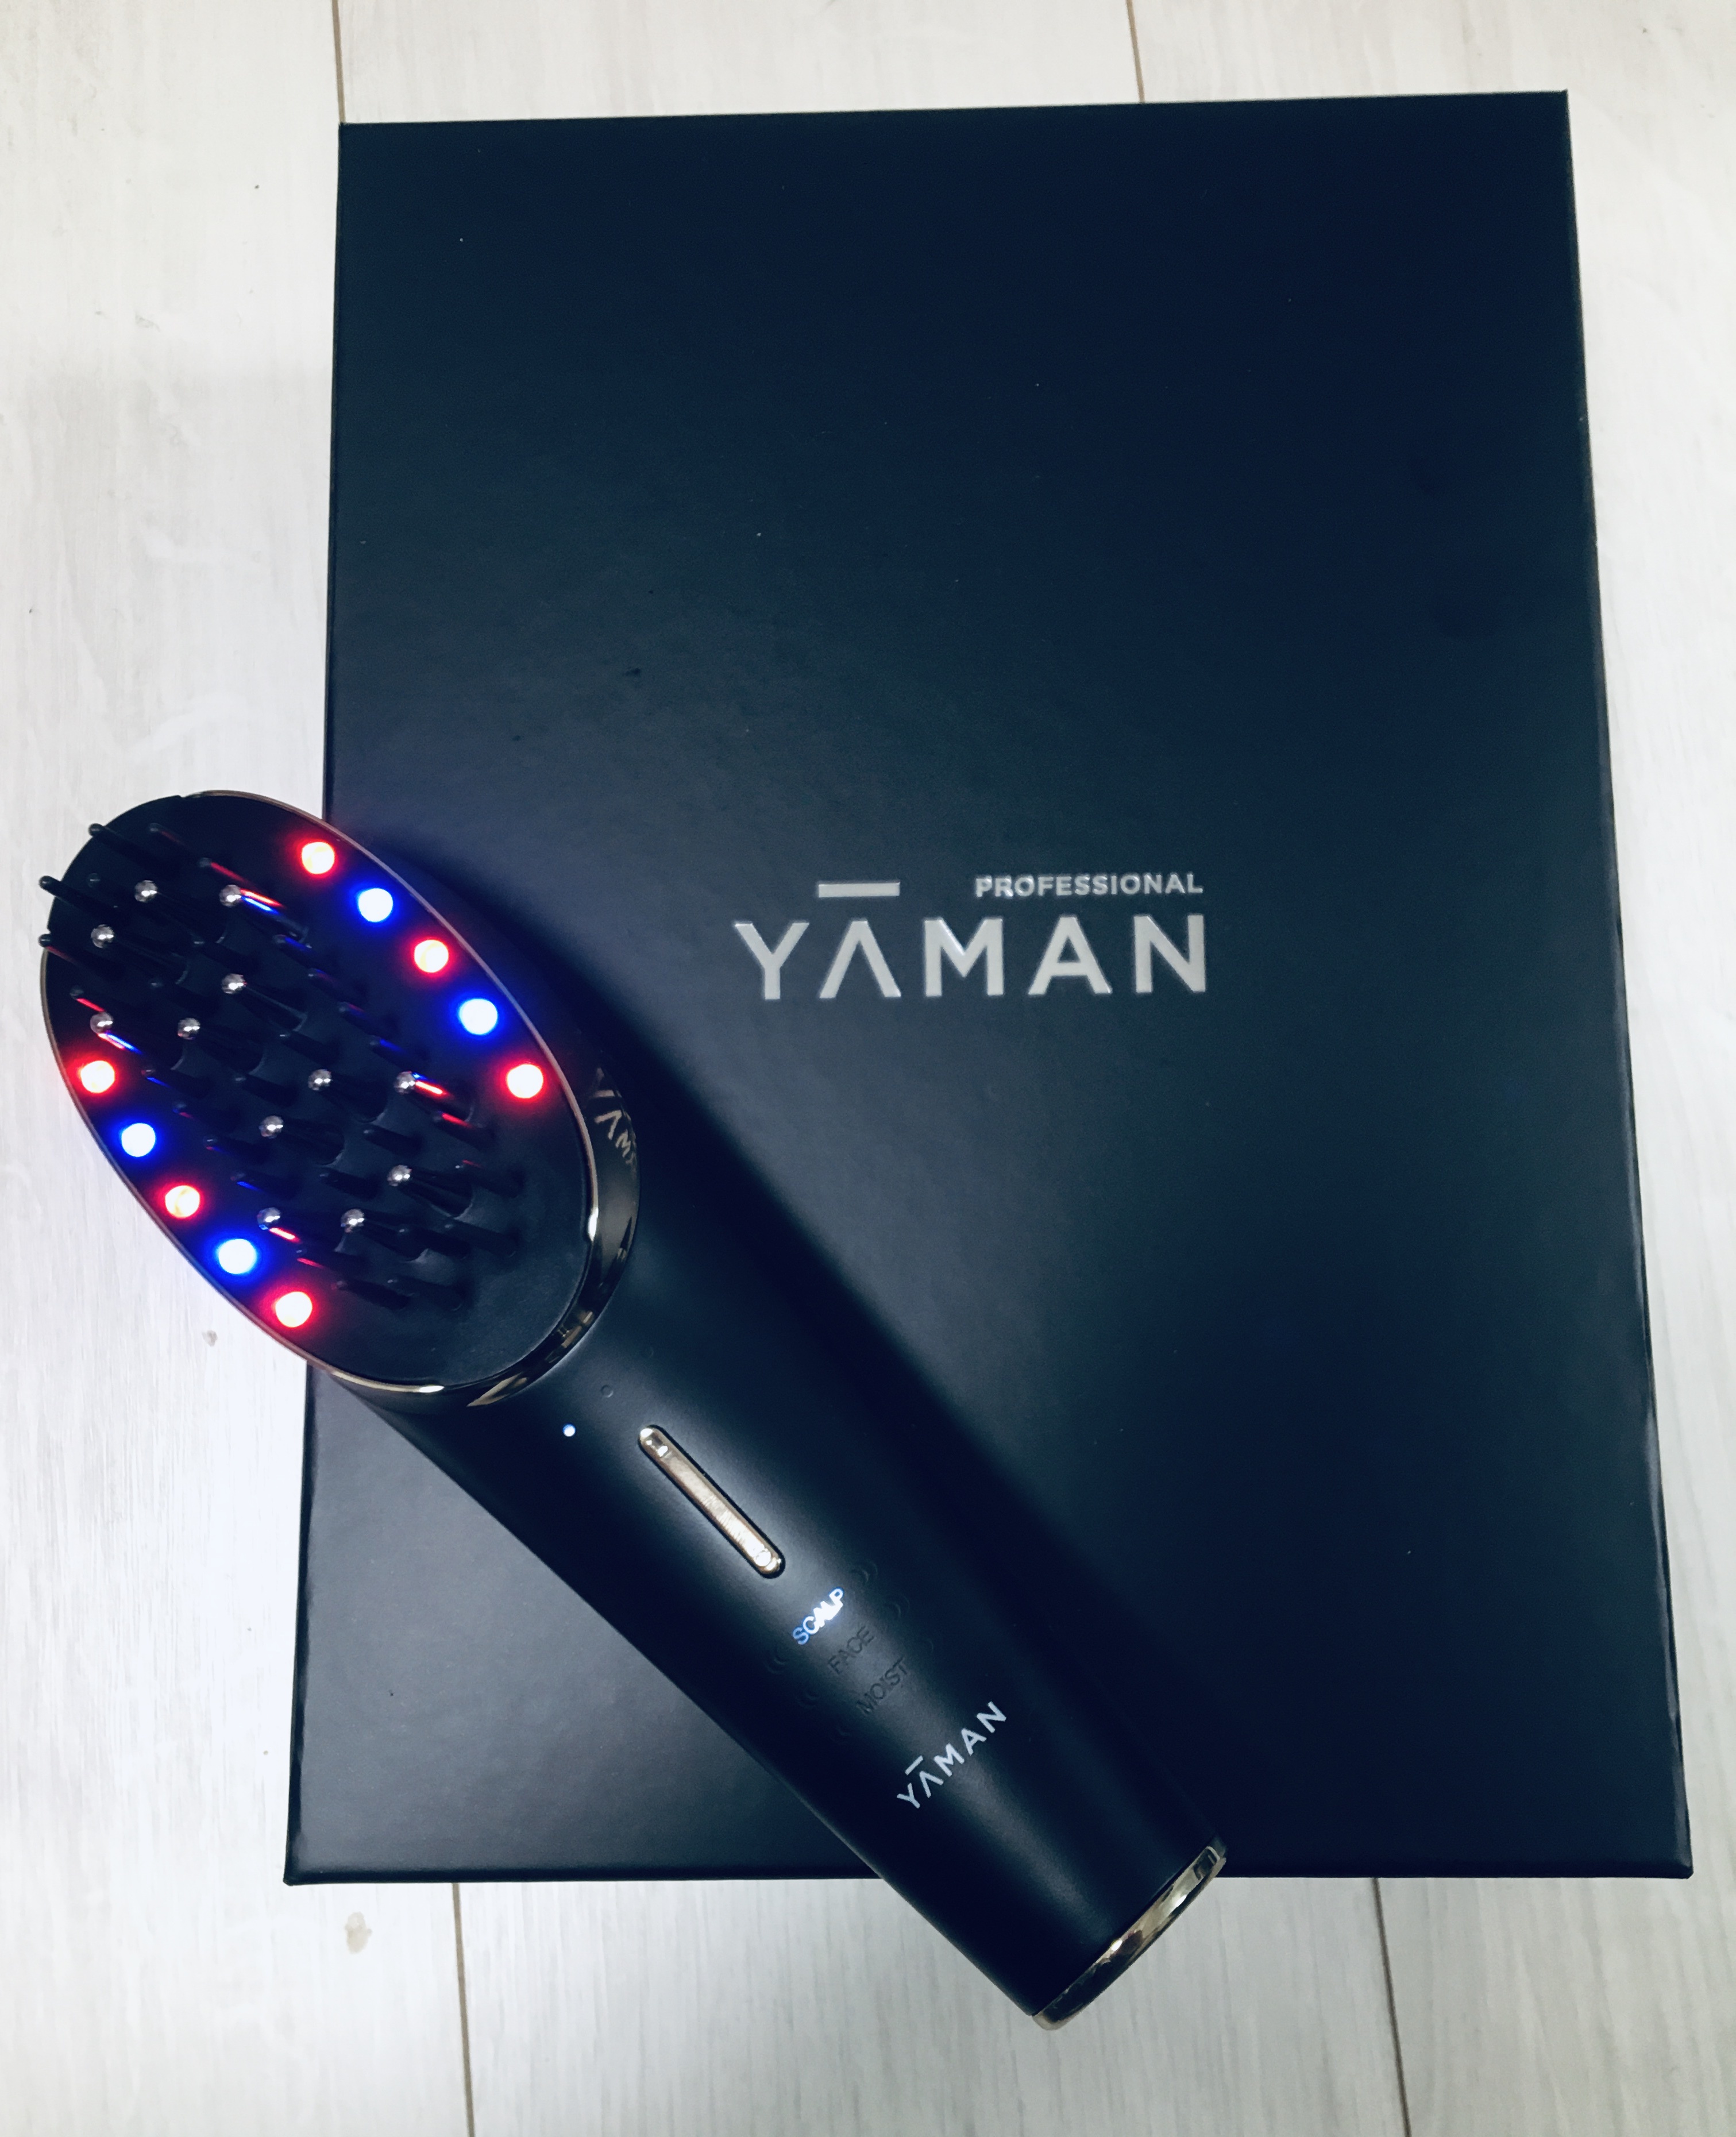 YA-MAN PROFESSIONAL / ヴェーダスカルプブラシBS for Salonの公式商品